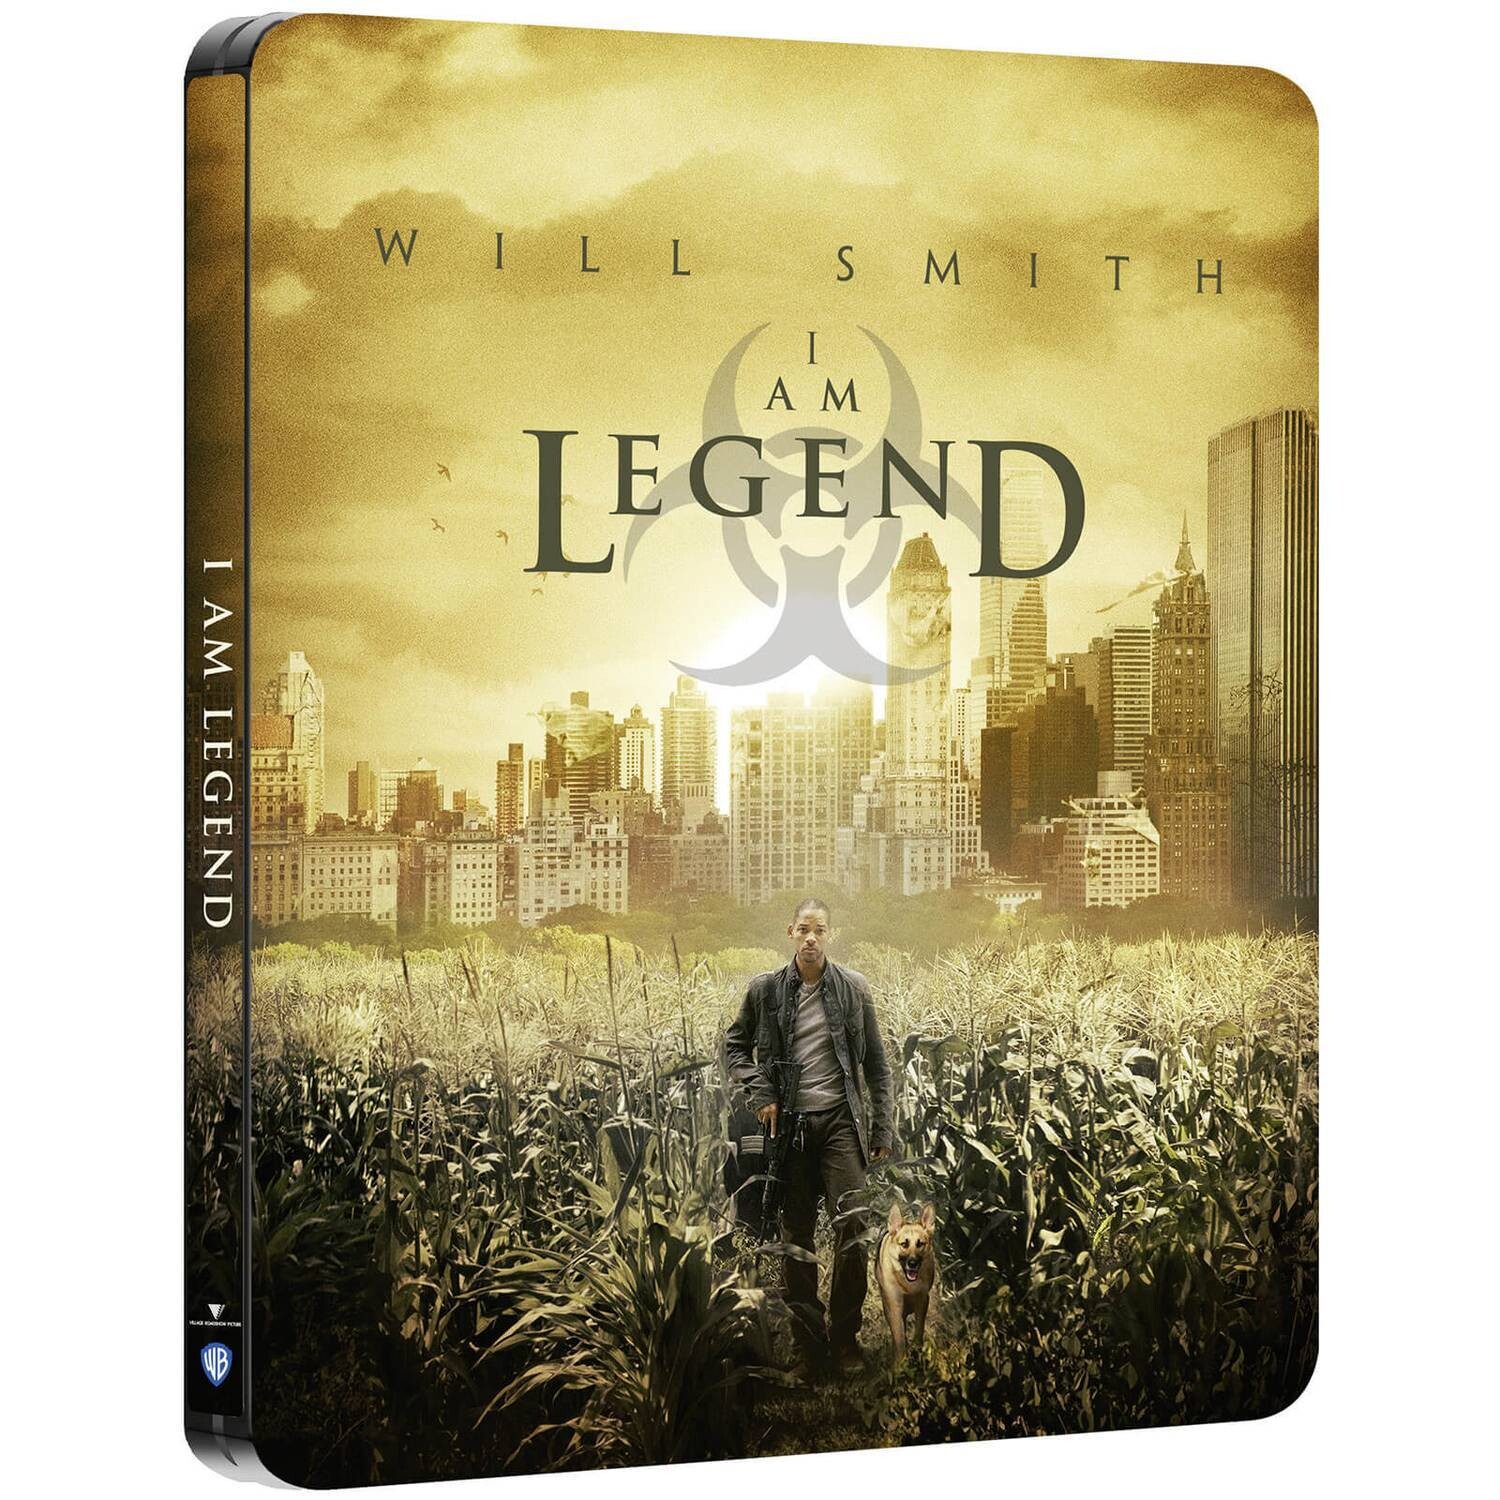 I Am Legend [2007] 4K Ultra HD + Blu-ray Steelbook [Region Free]